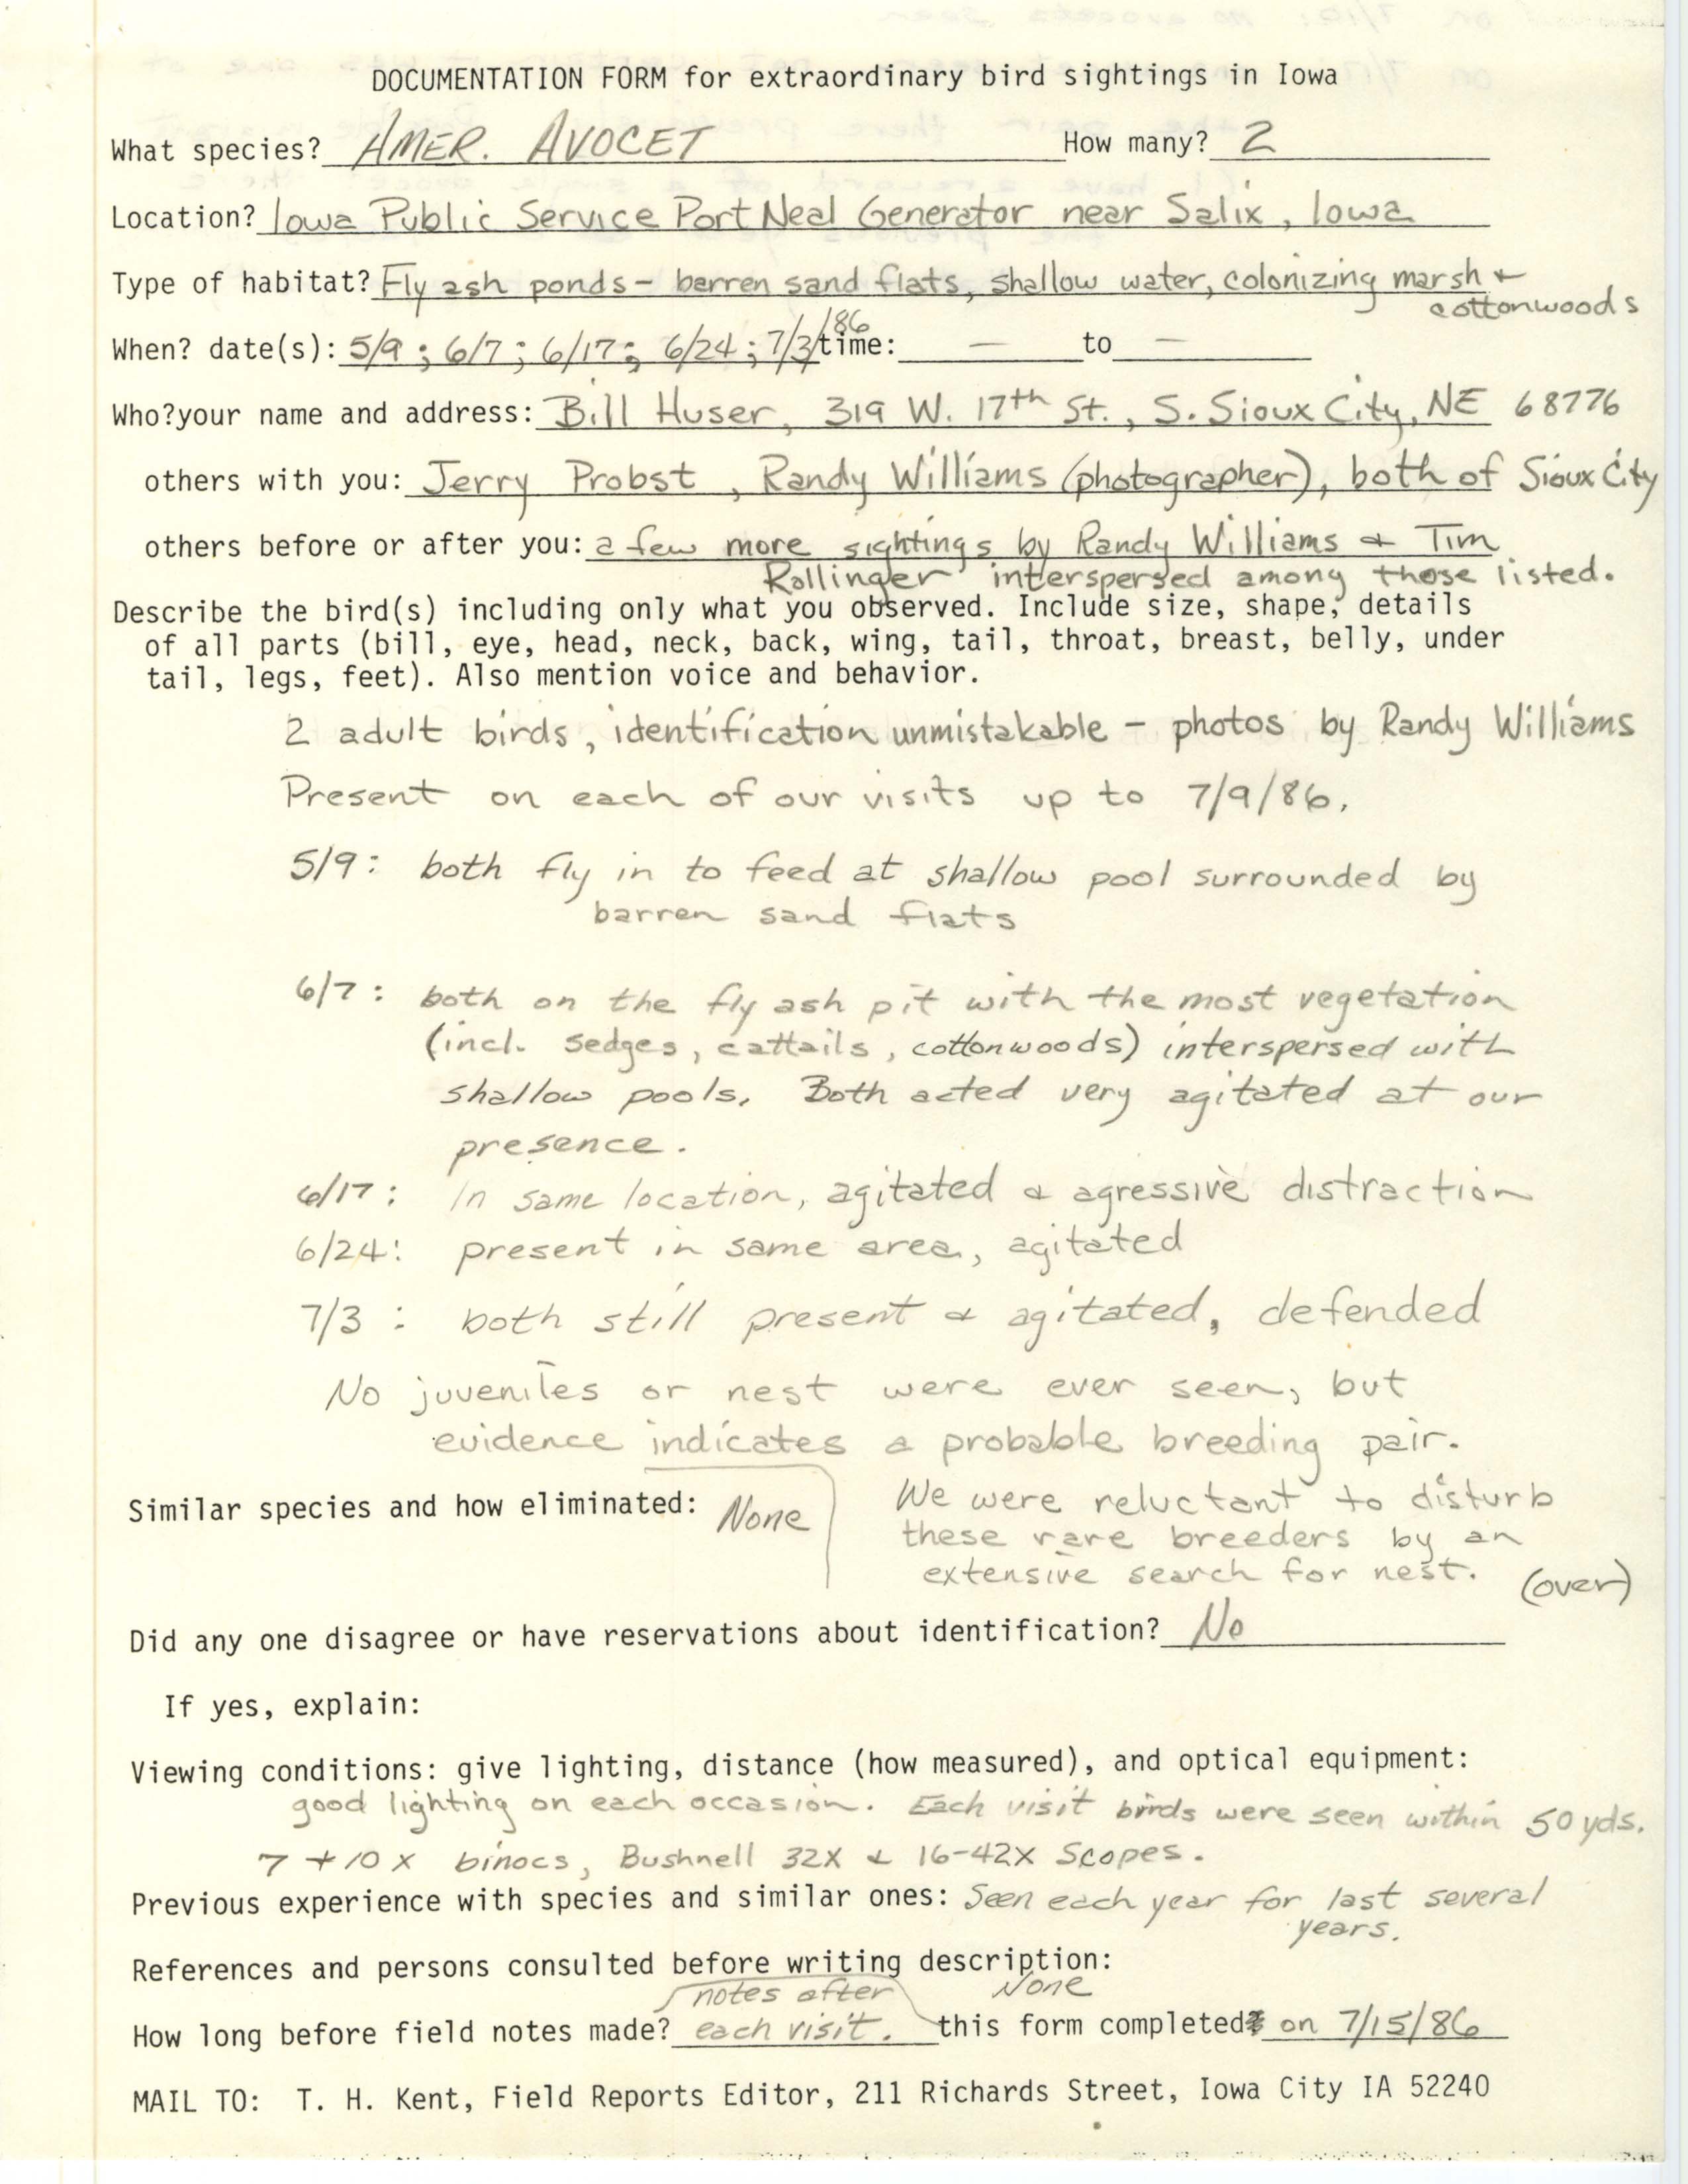 Rare bird documentation form for American Avocet near New Lake, 1986